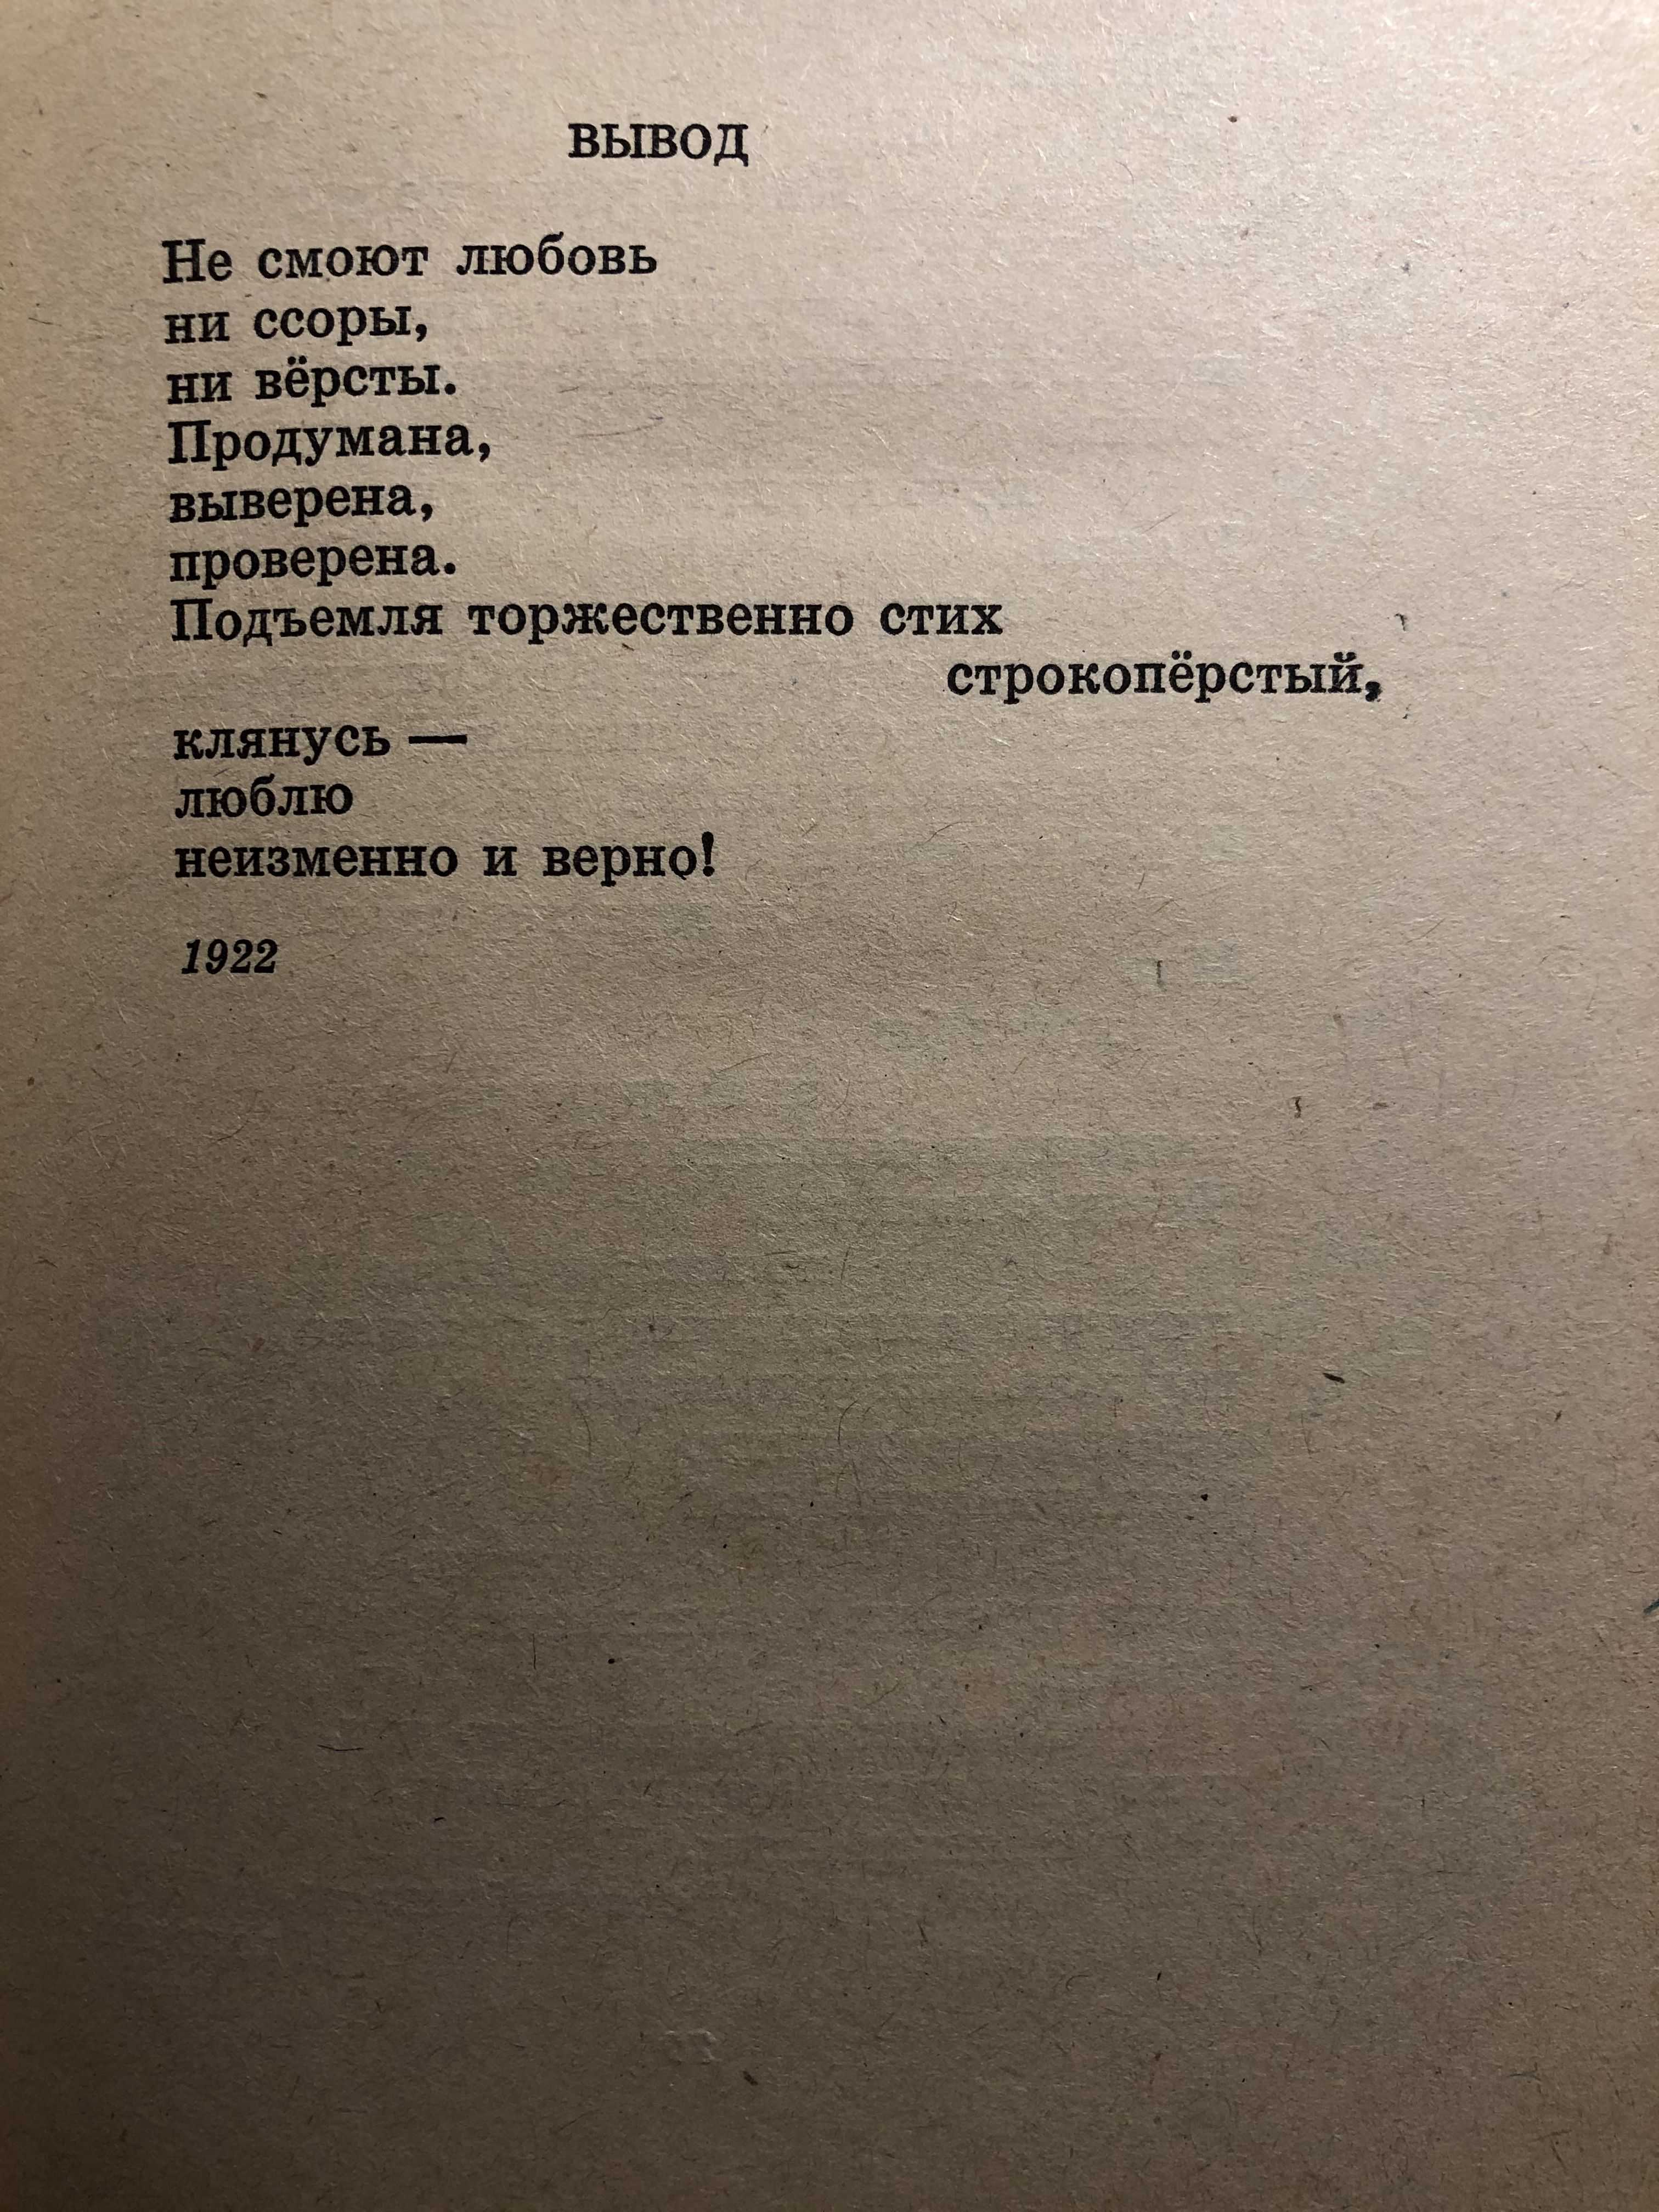 Стихи владимира маяковского - лучший сборник стихотворений